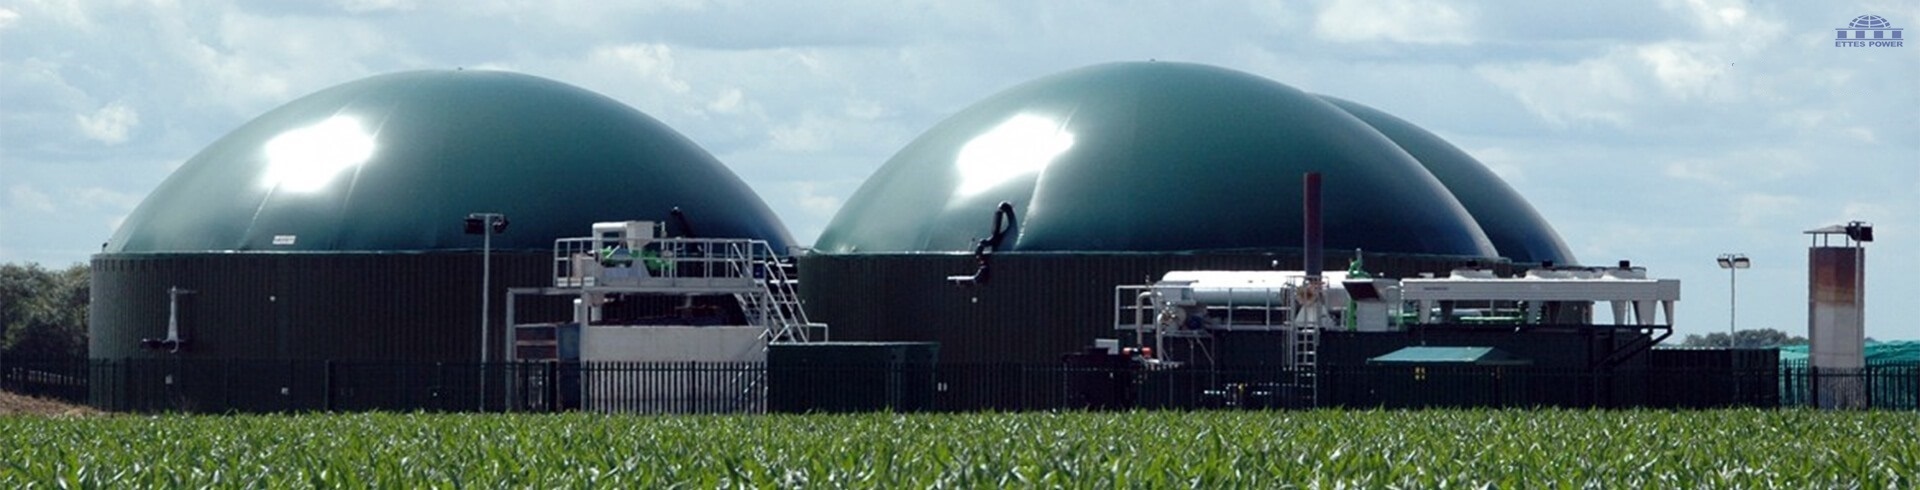 MAN 500kW 1MW container farm biogas generator power plant & CHP ETTES POWER